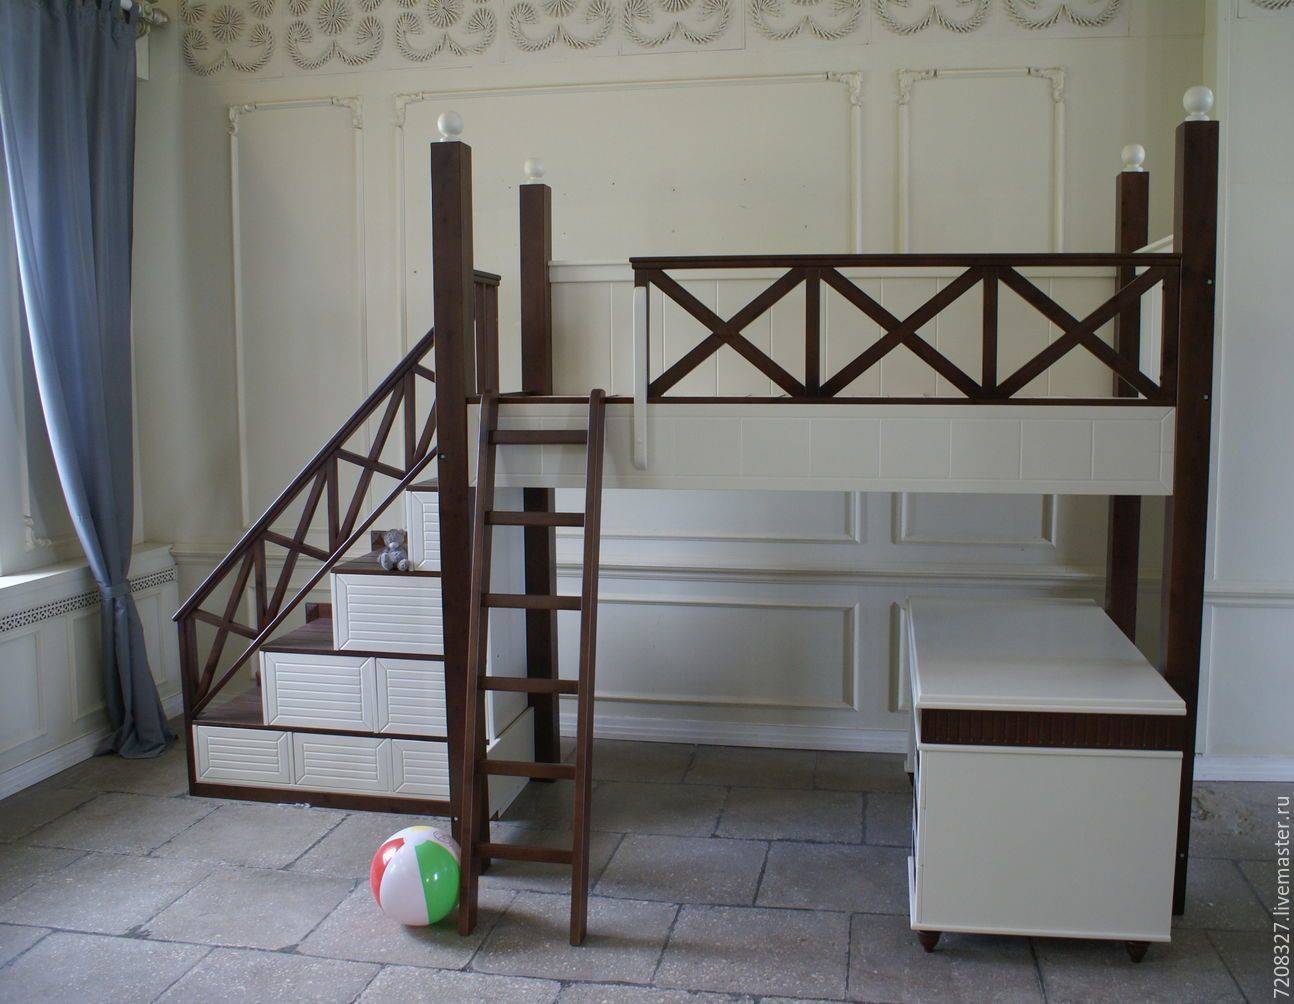 Лестница для кровати чердака - всё о лестницах